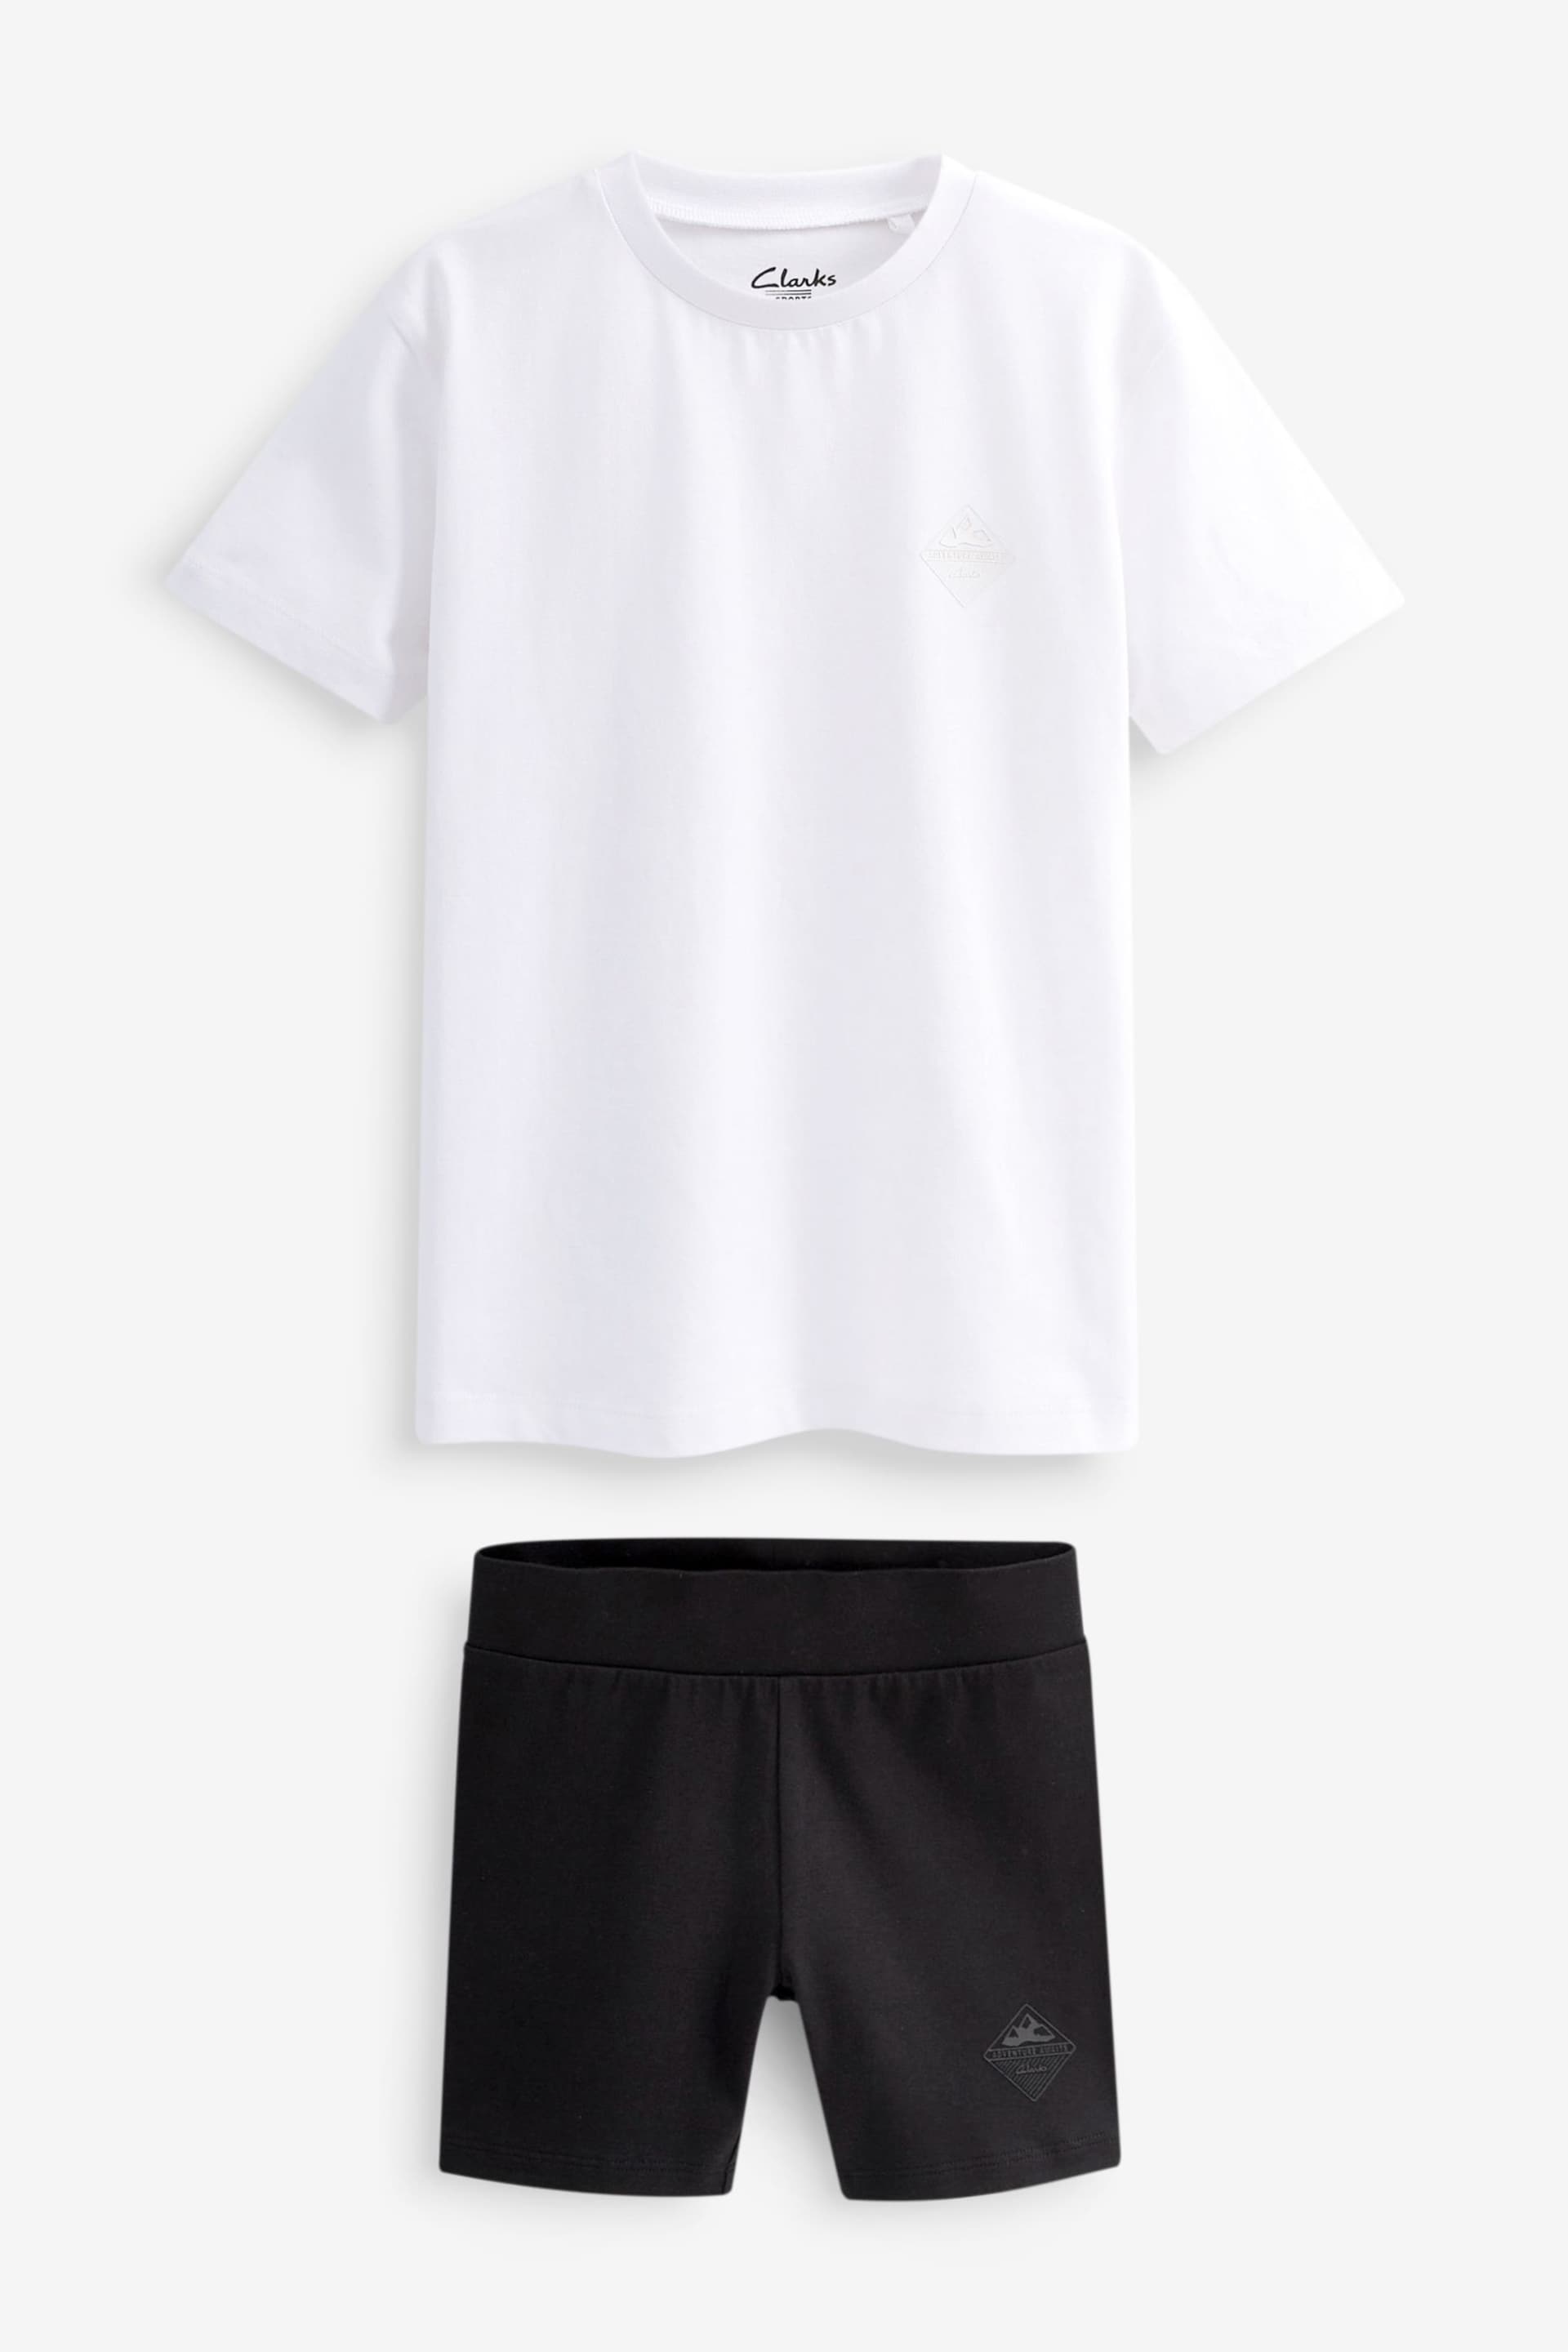 Clarks White Girls T-Shirt, Shorts and Bag PE Kit - Image 6 of 9